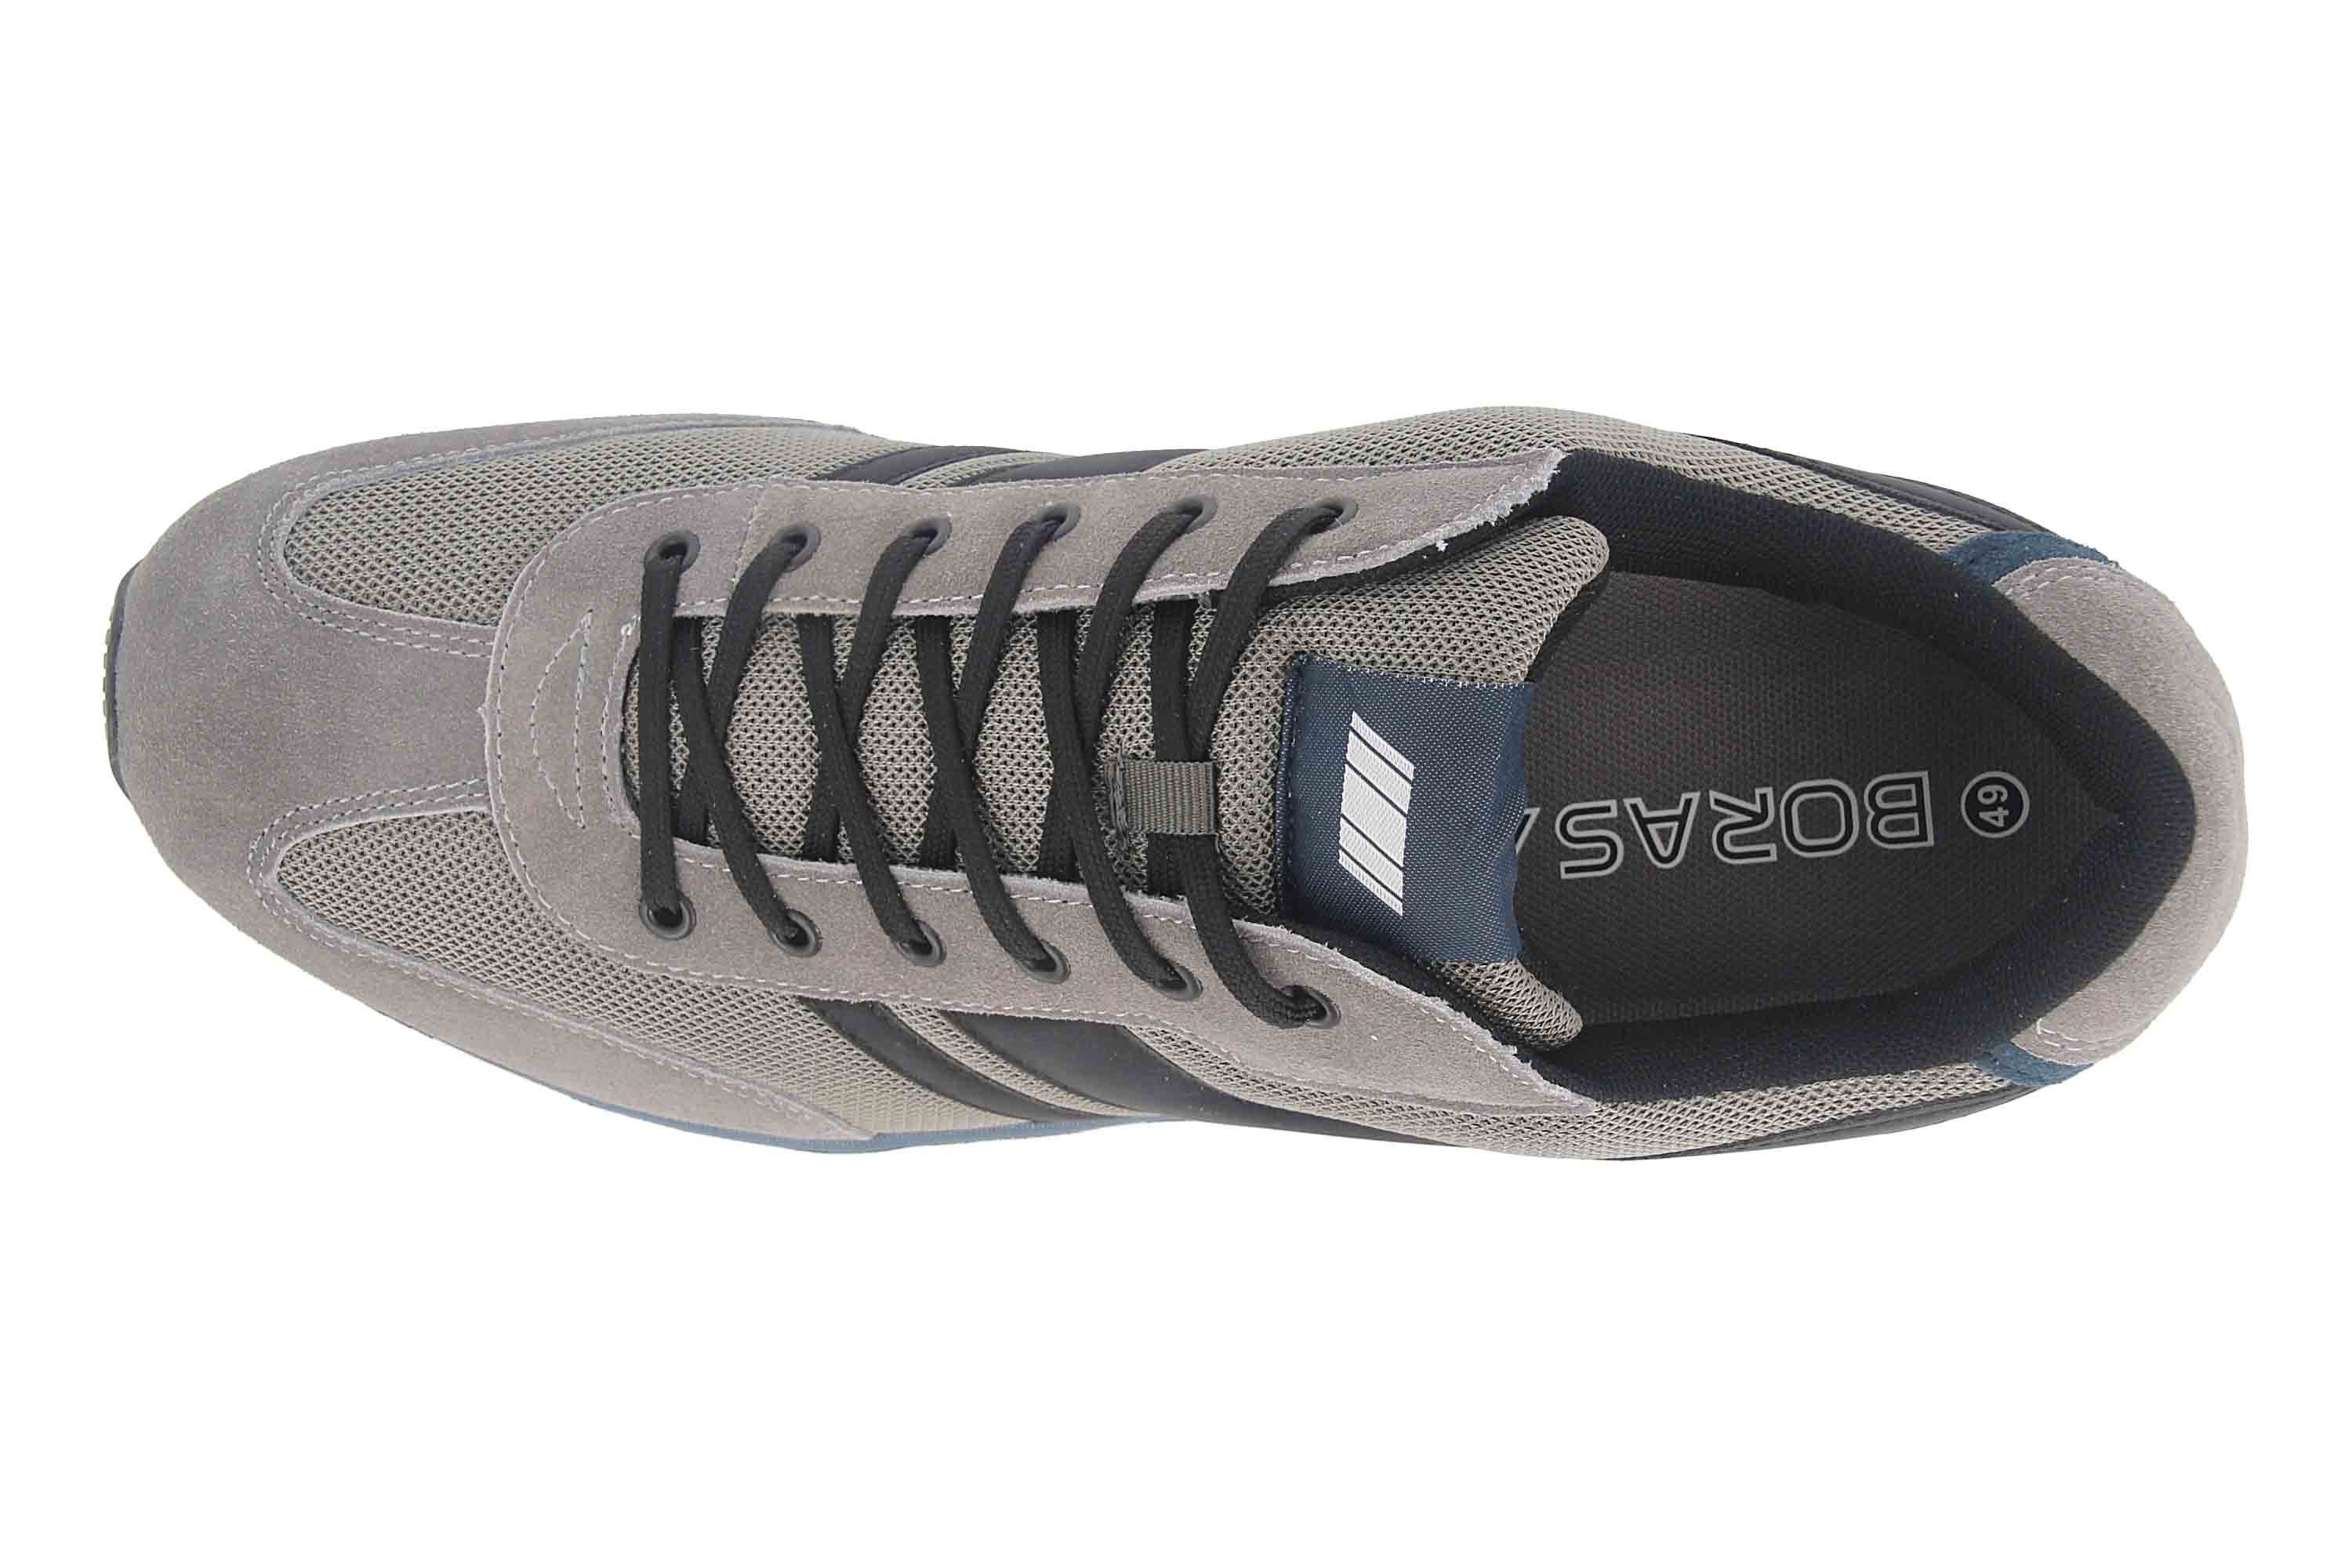 BORAS 5250-1578 Sneaker grey/navy/black